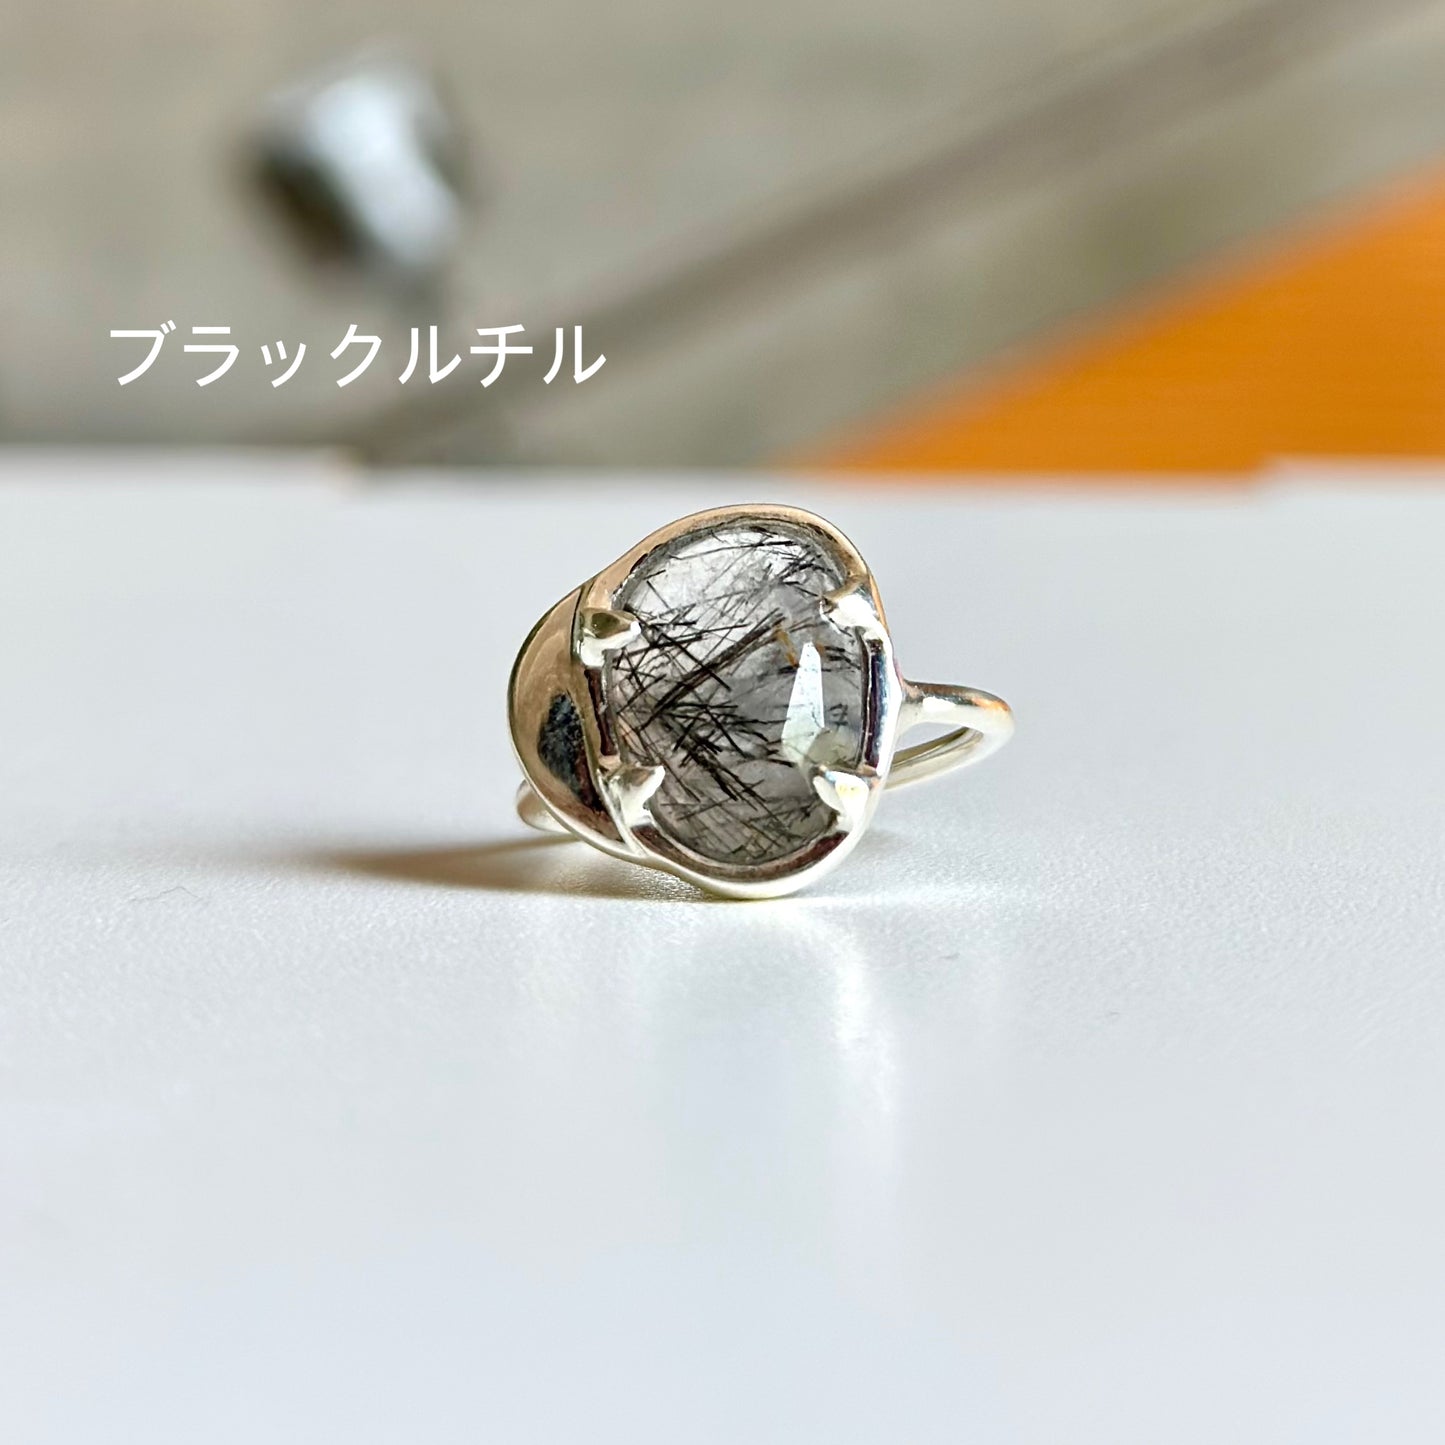 Silver925 design ring 8